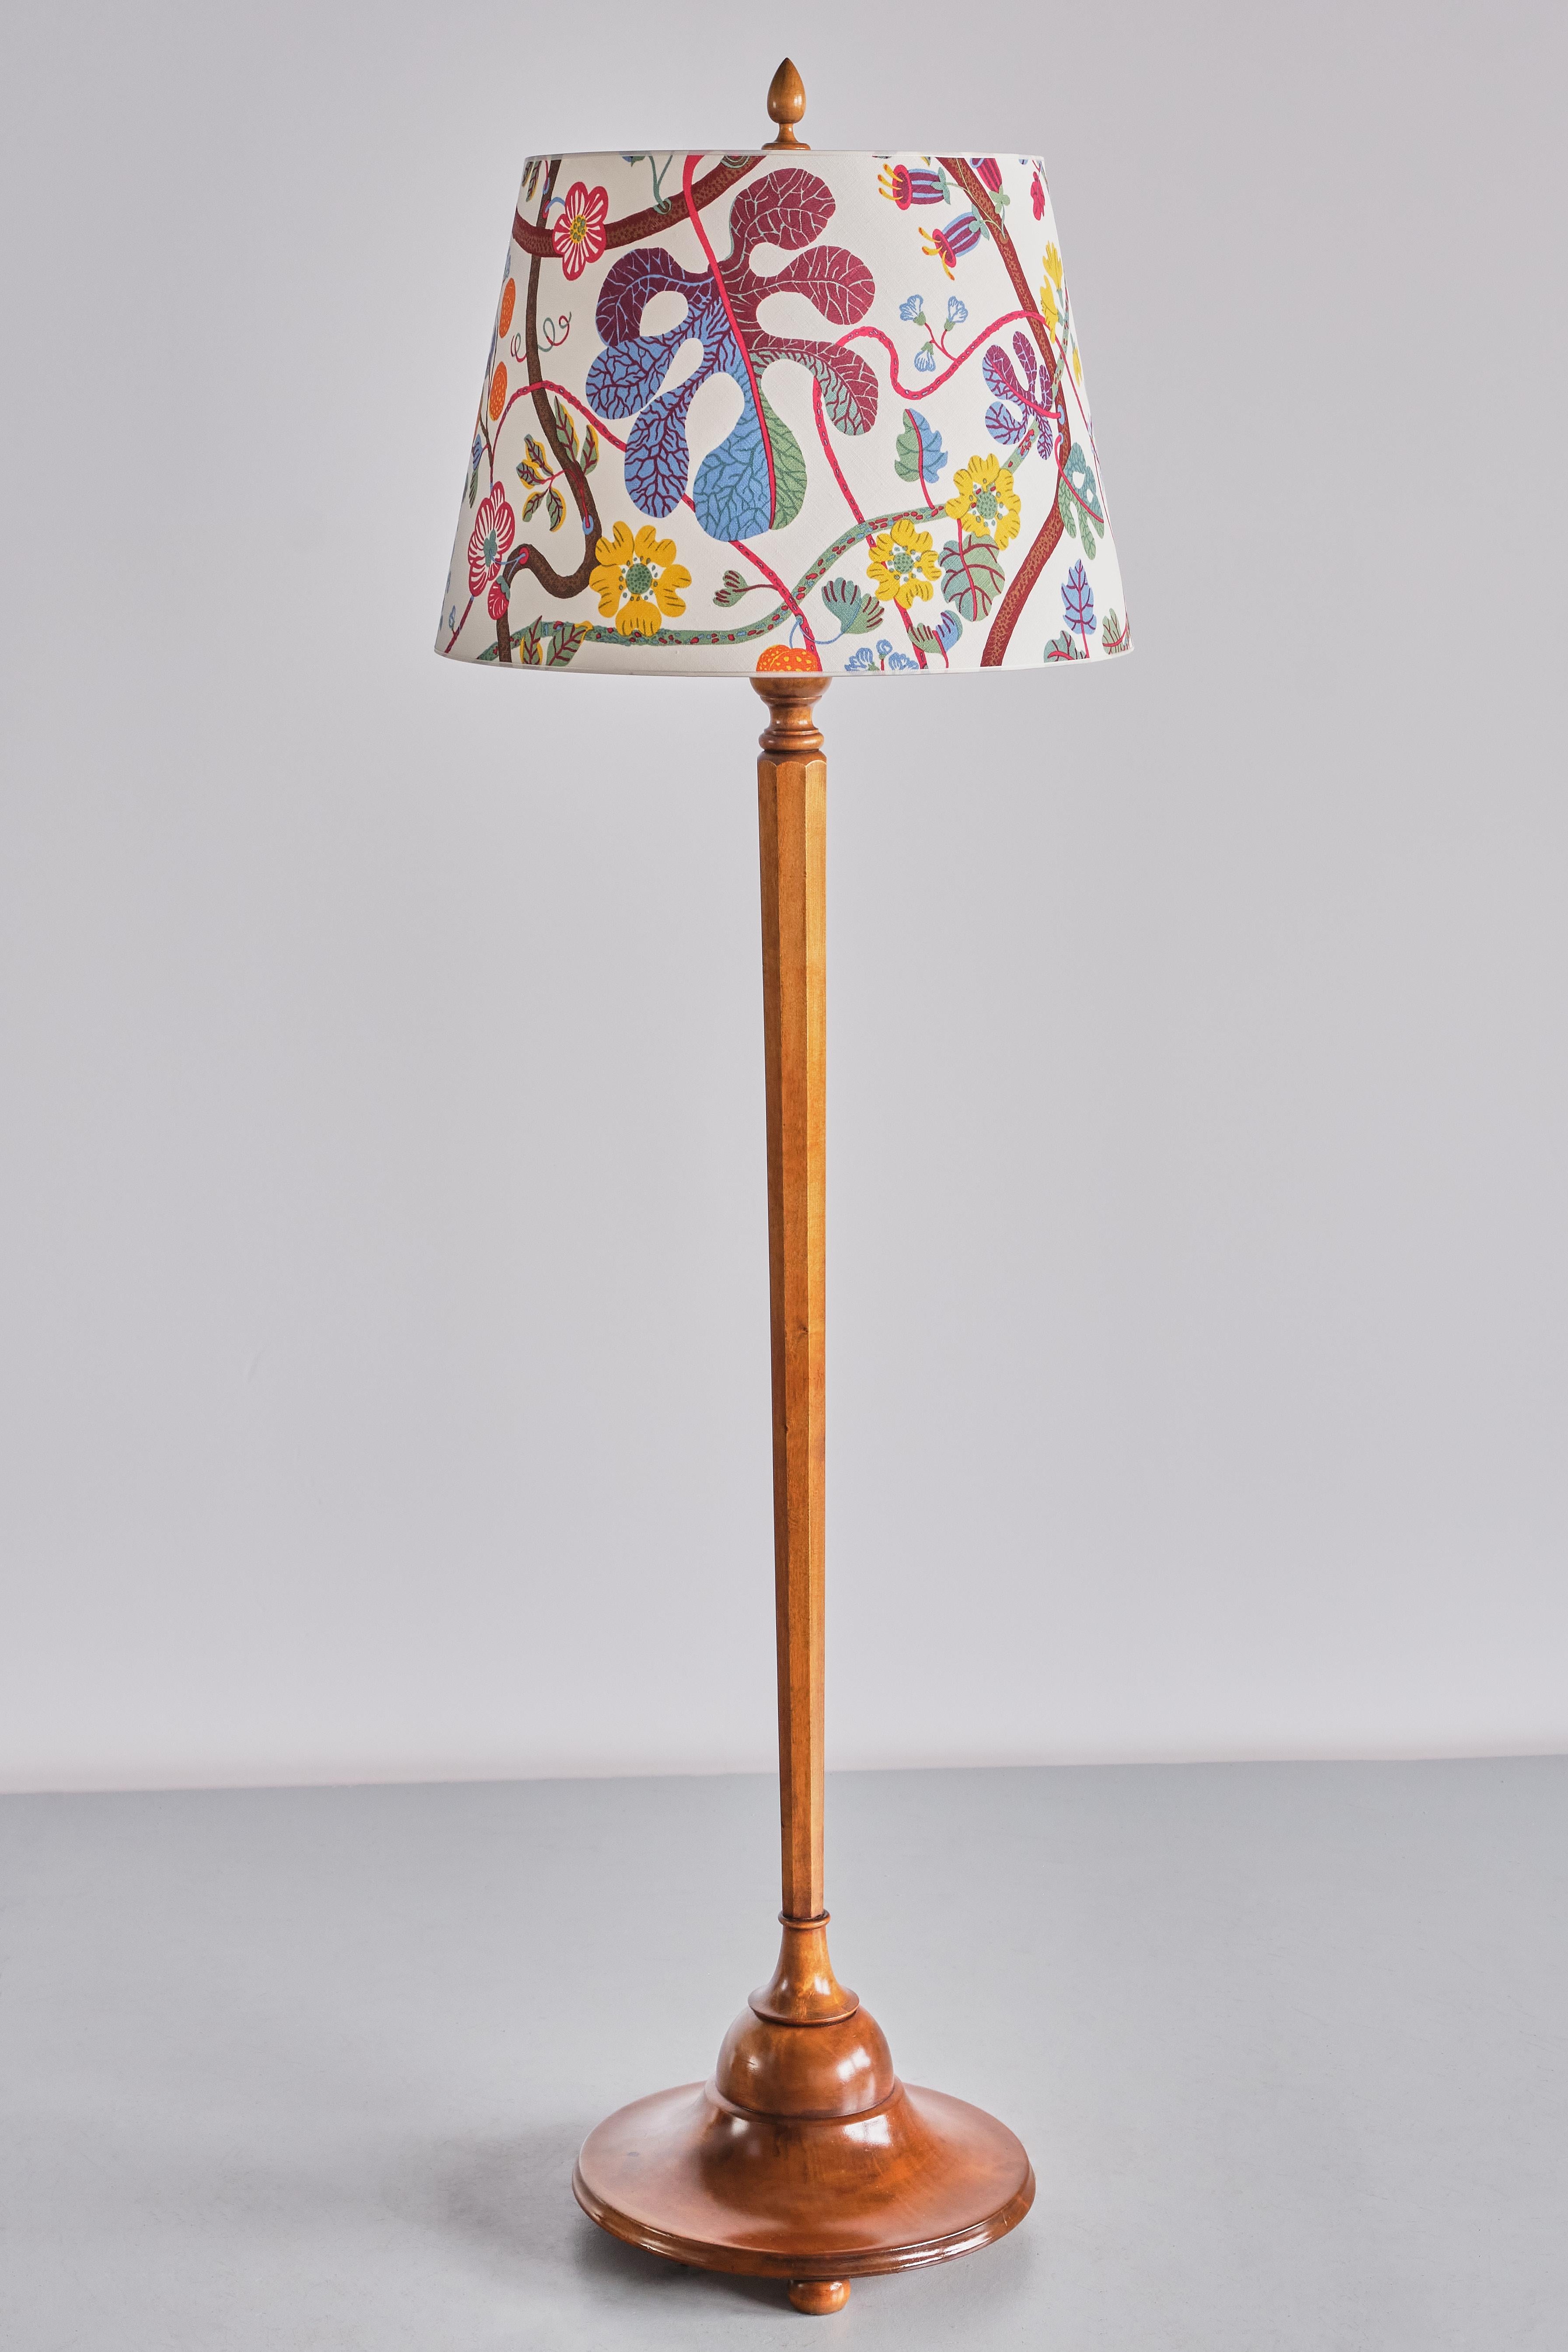 Rare Otto Schulz Floor Lamp in Birch Wood, Josef Frank Shade, Boet, Sweden, 1928 For Sale 7